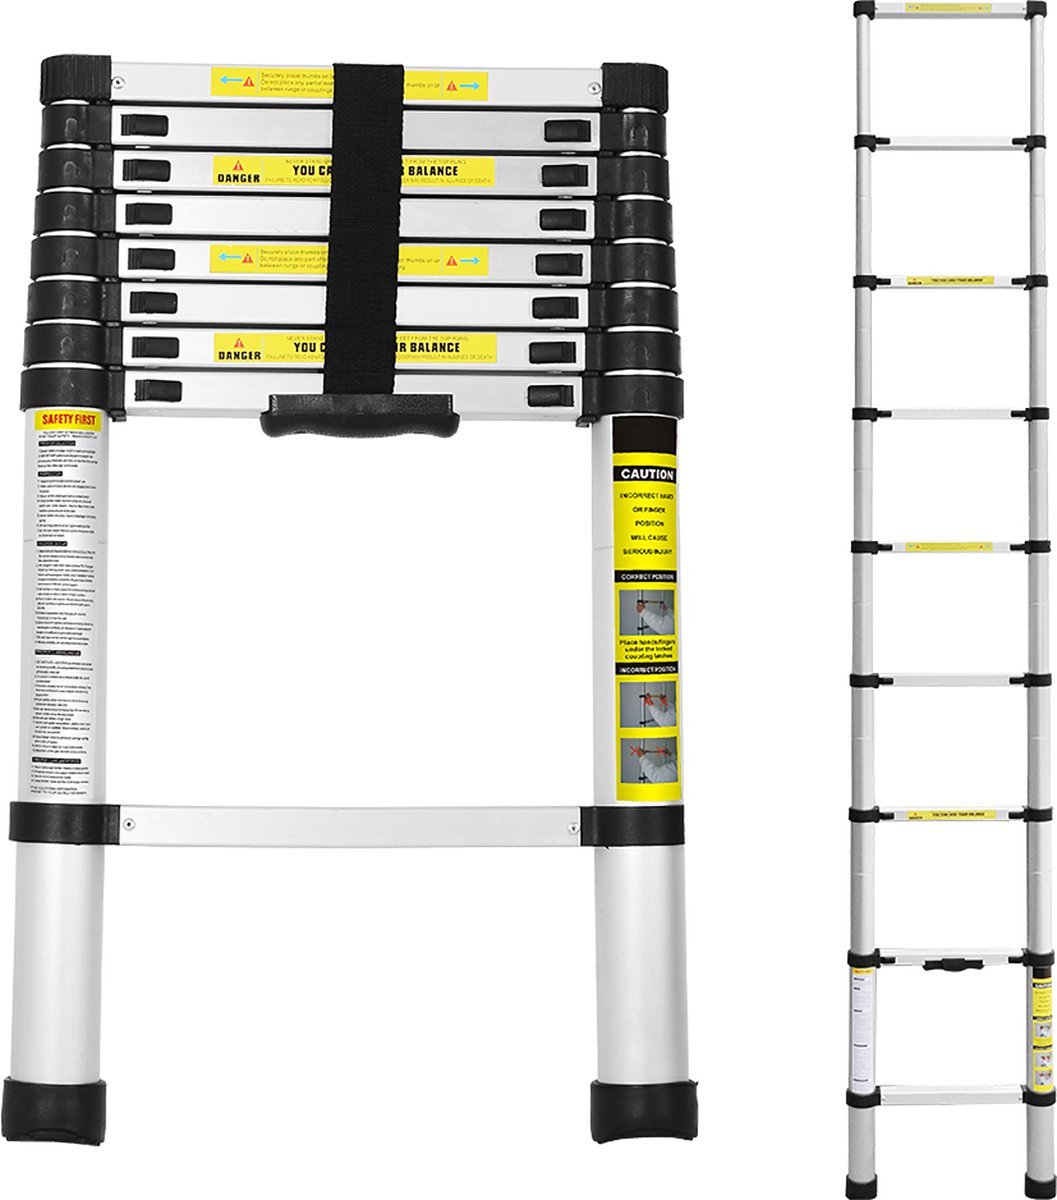 IMTEX Telescopische ladder - aluminium - 3.80 meter hoog